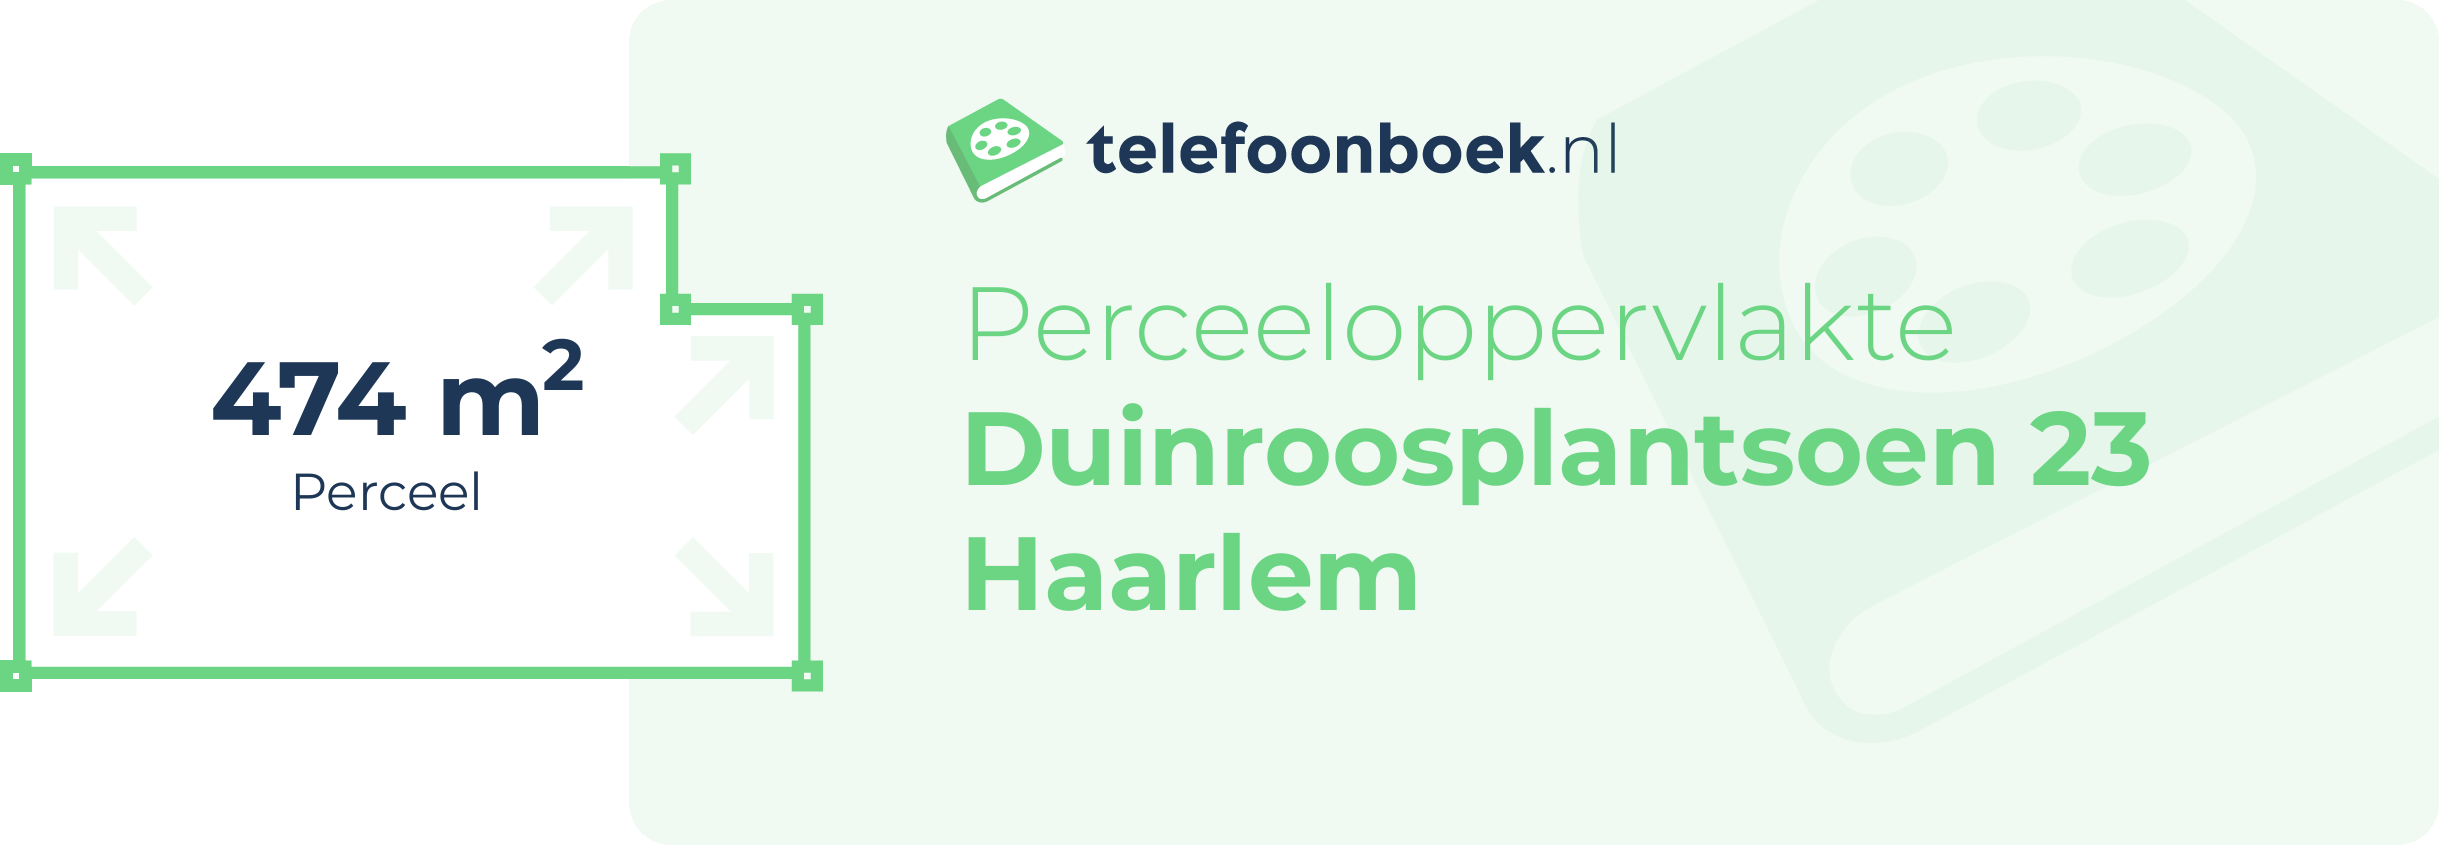 Perceeloppervlakte Duinroosplantsoen 23 Haarlem